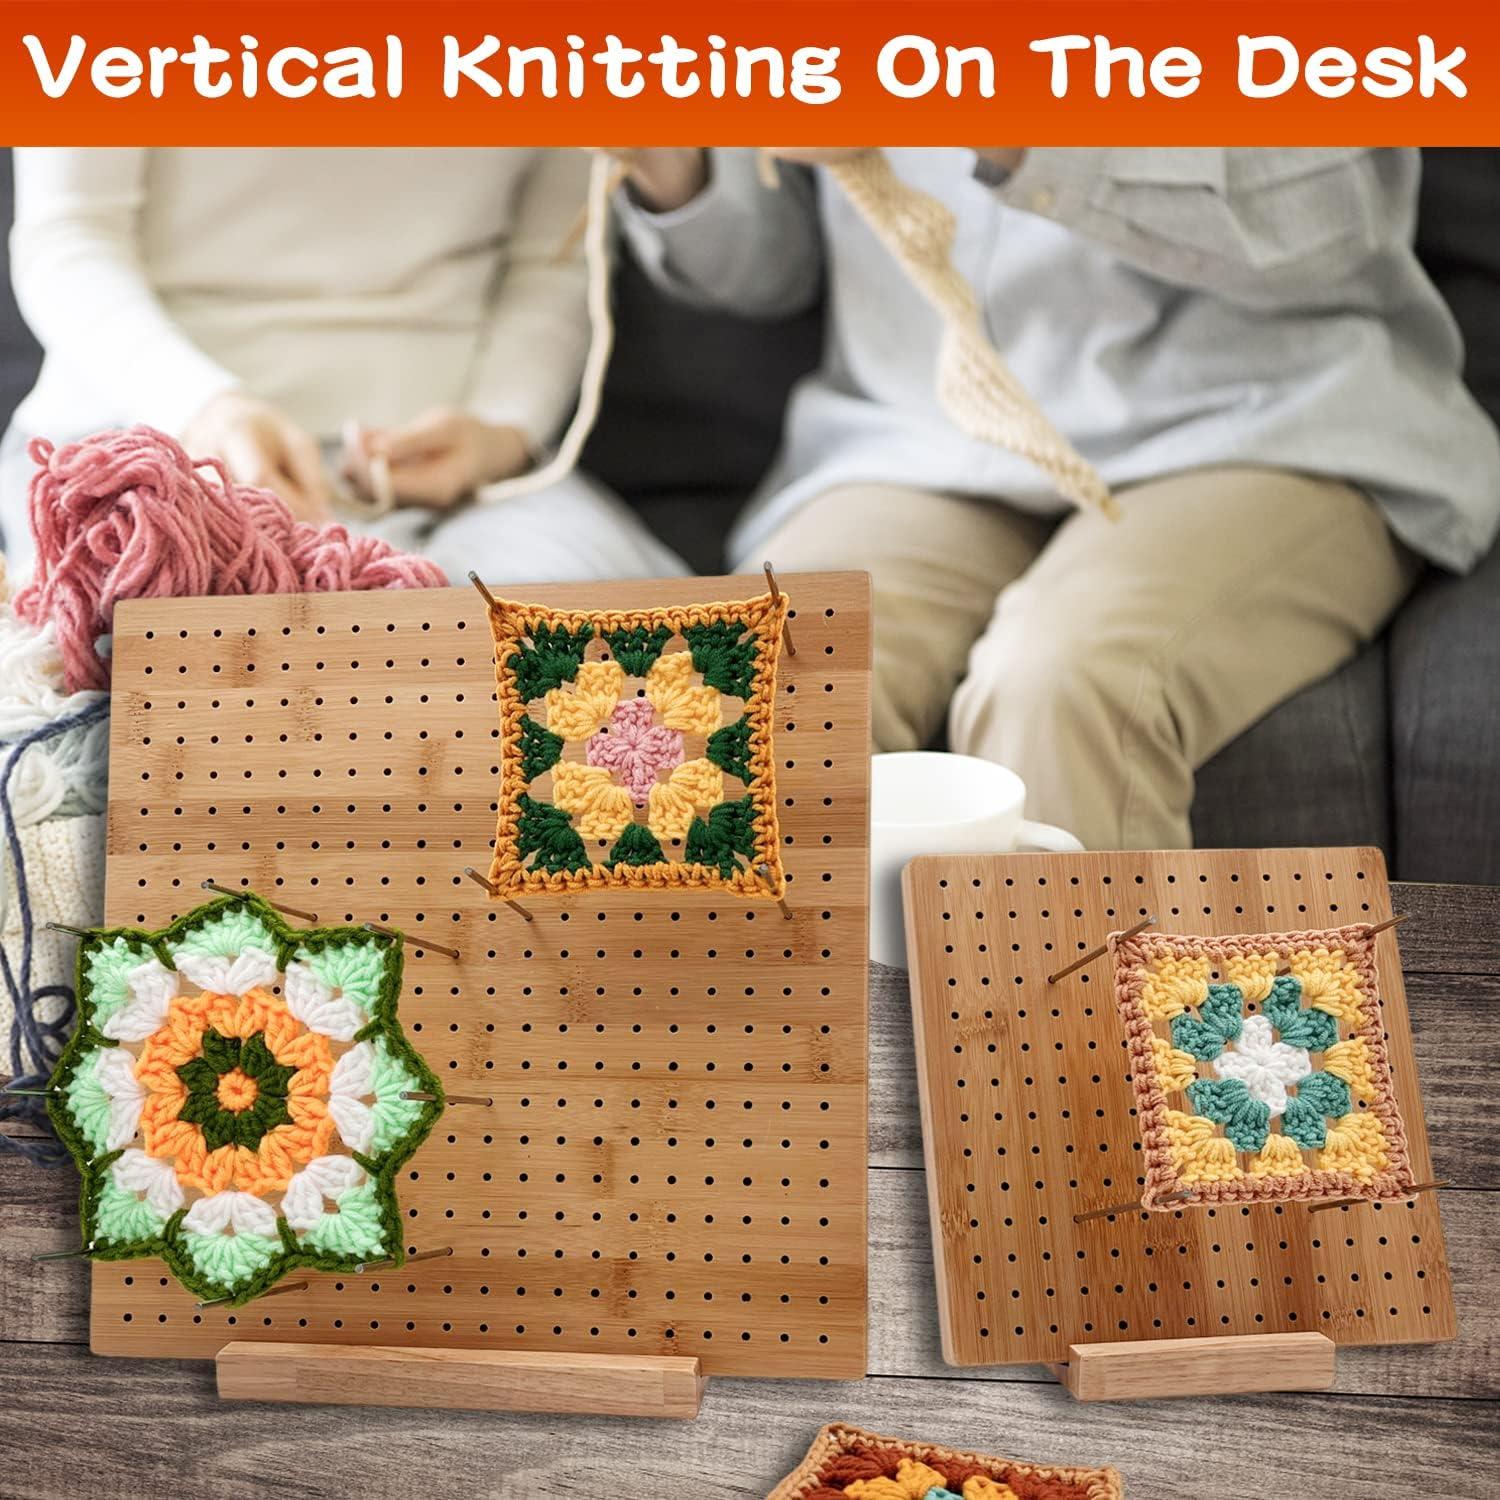 Pin on Creative crochet & knitting